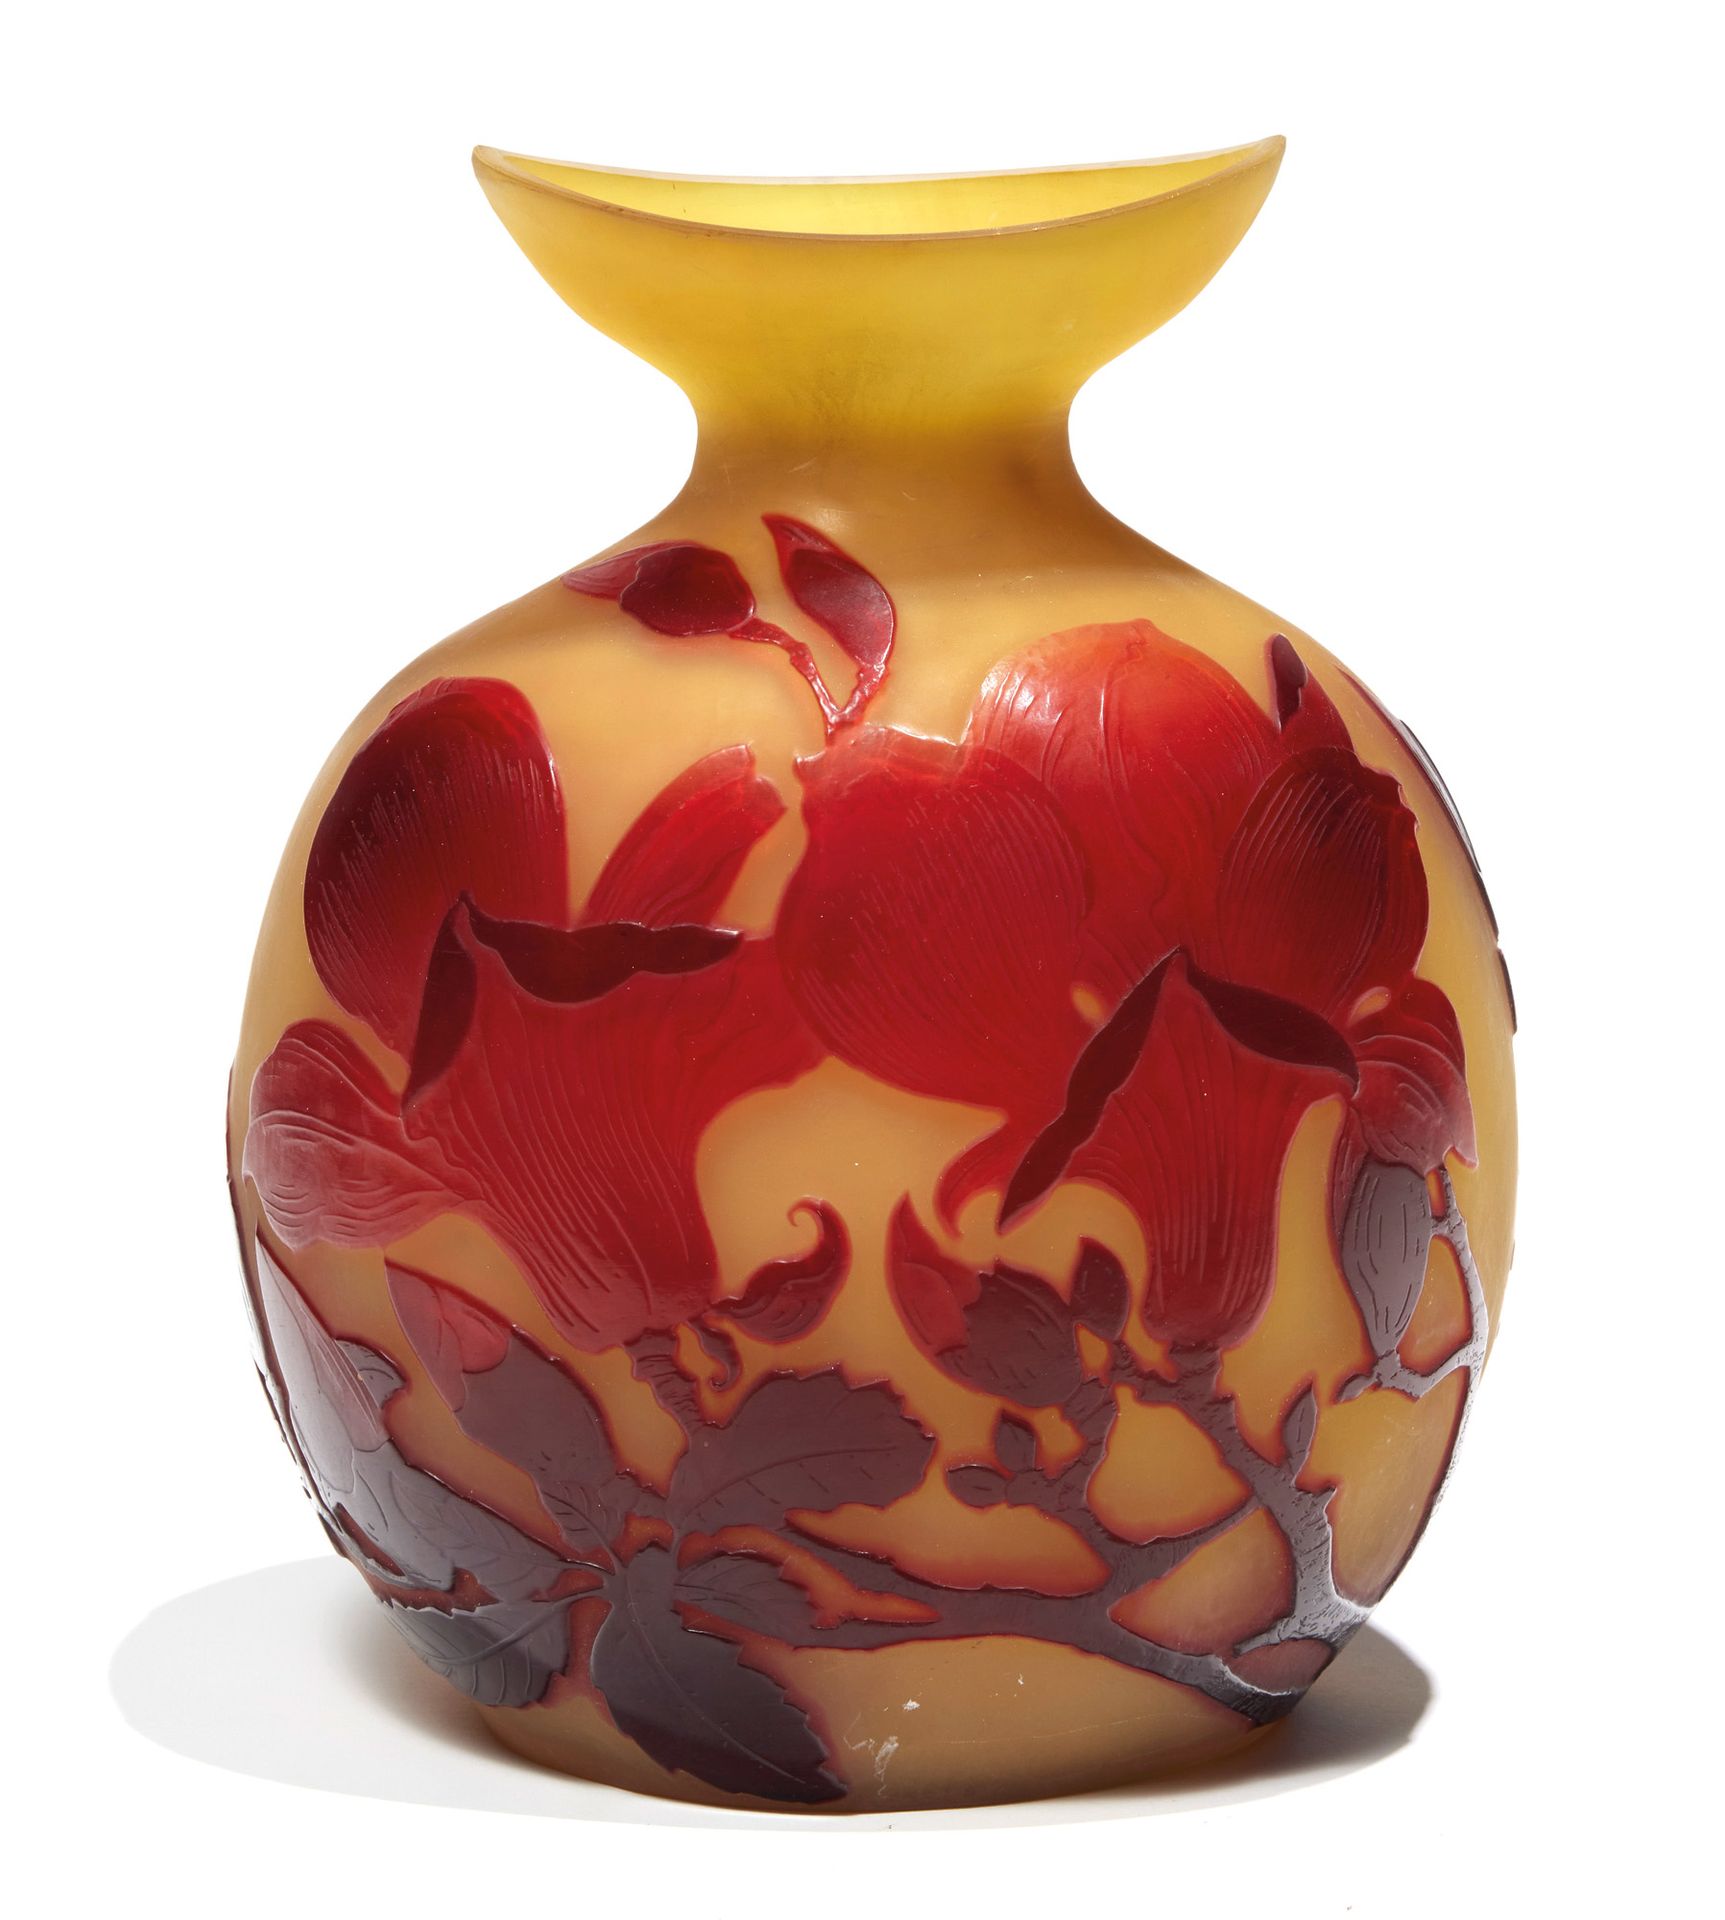 ÉTABLISSEMENTS GALLÉ 加莱机构

一个多层玻璃葫芦花瓶，在黄色的背景上用酸和轮子浮雕了一个郁金香树的图案，颜色深浅不一。高21.5厘米。签名&hellip;